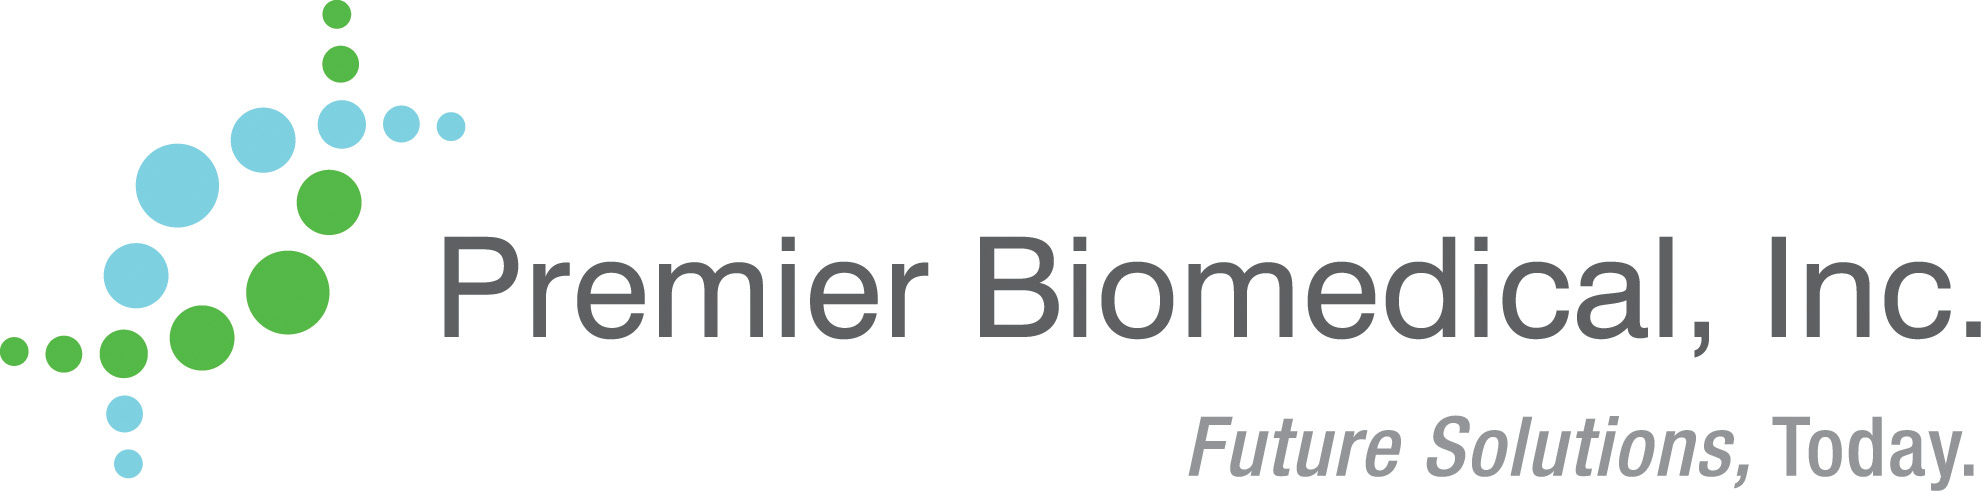 Premier Biomedical, Inc. Logo